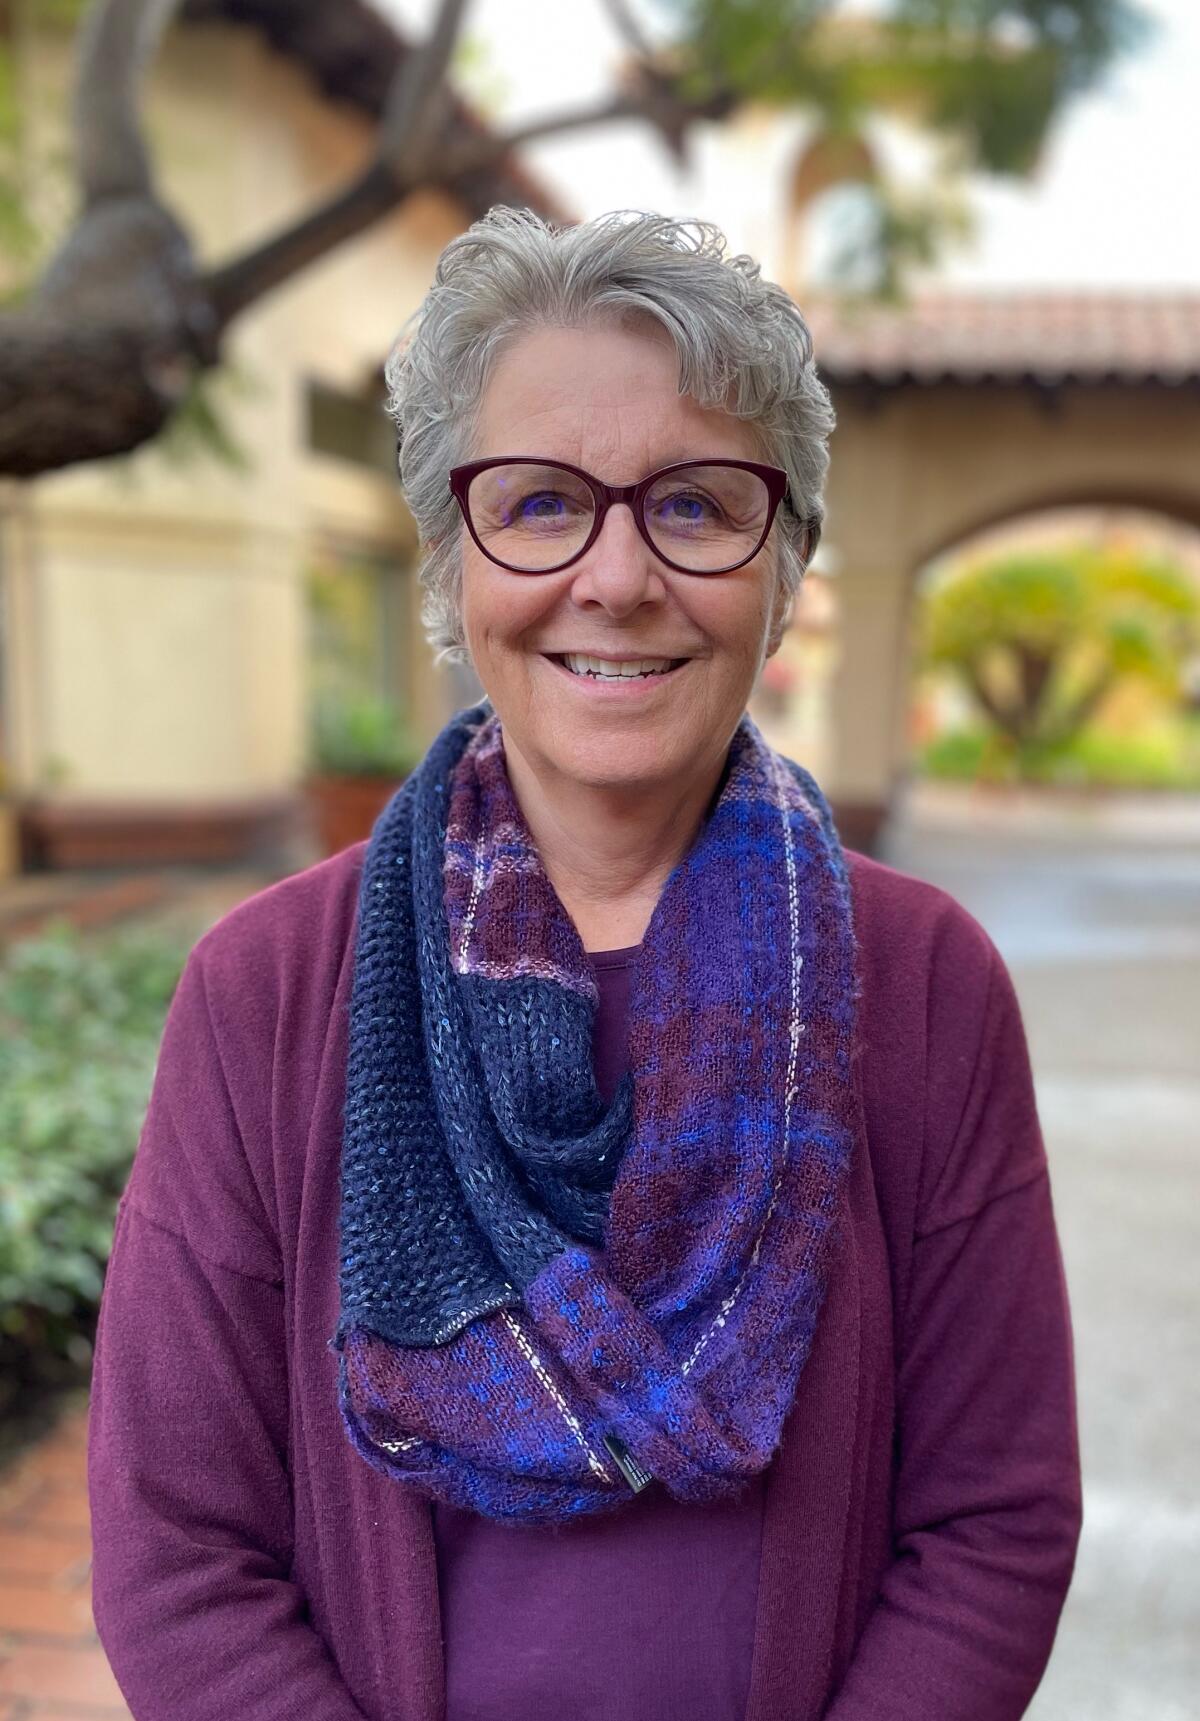 Karen Sprigle, the interim CEO of the Rancho Santa Fe Foundation